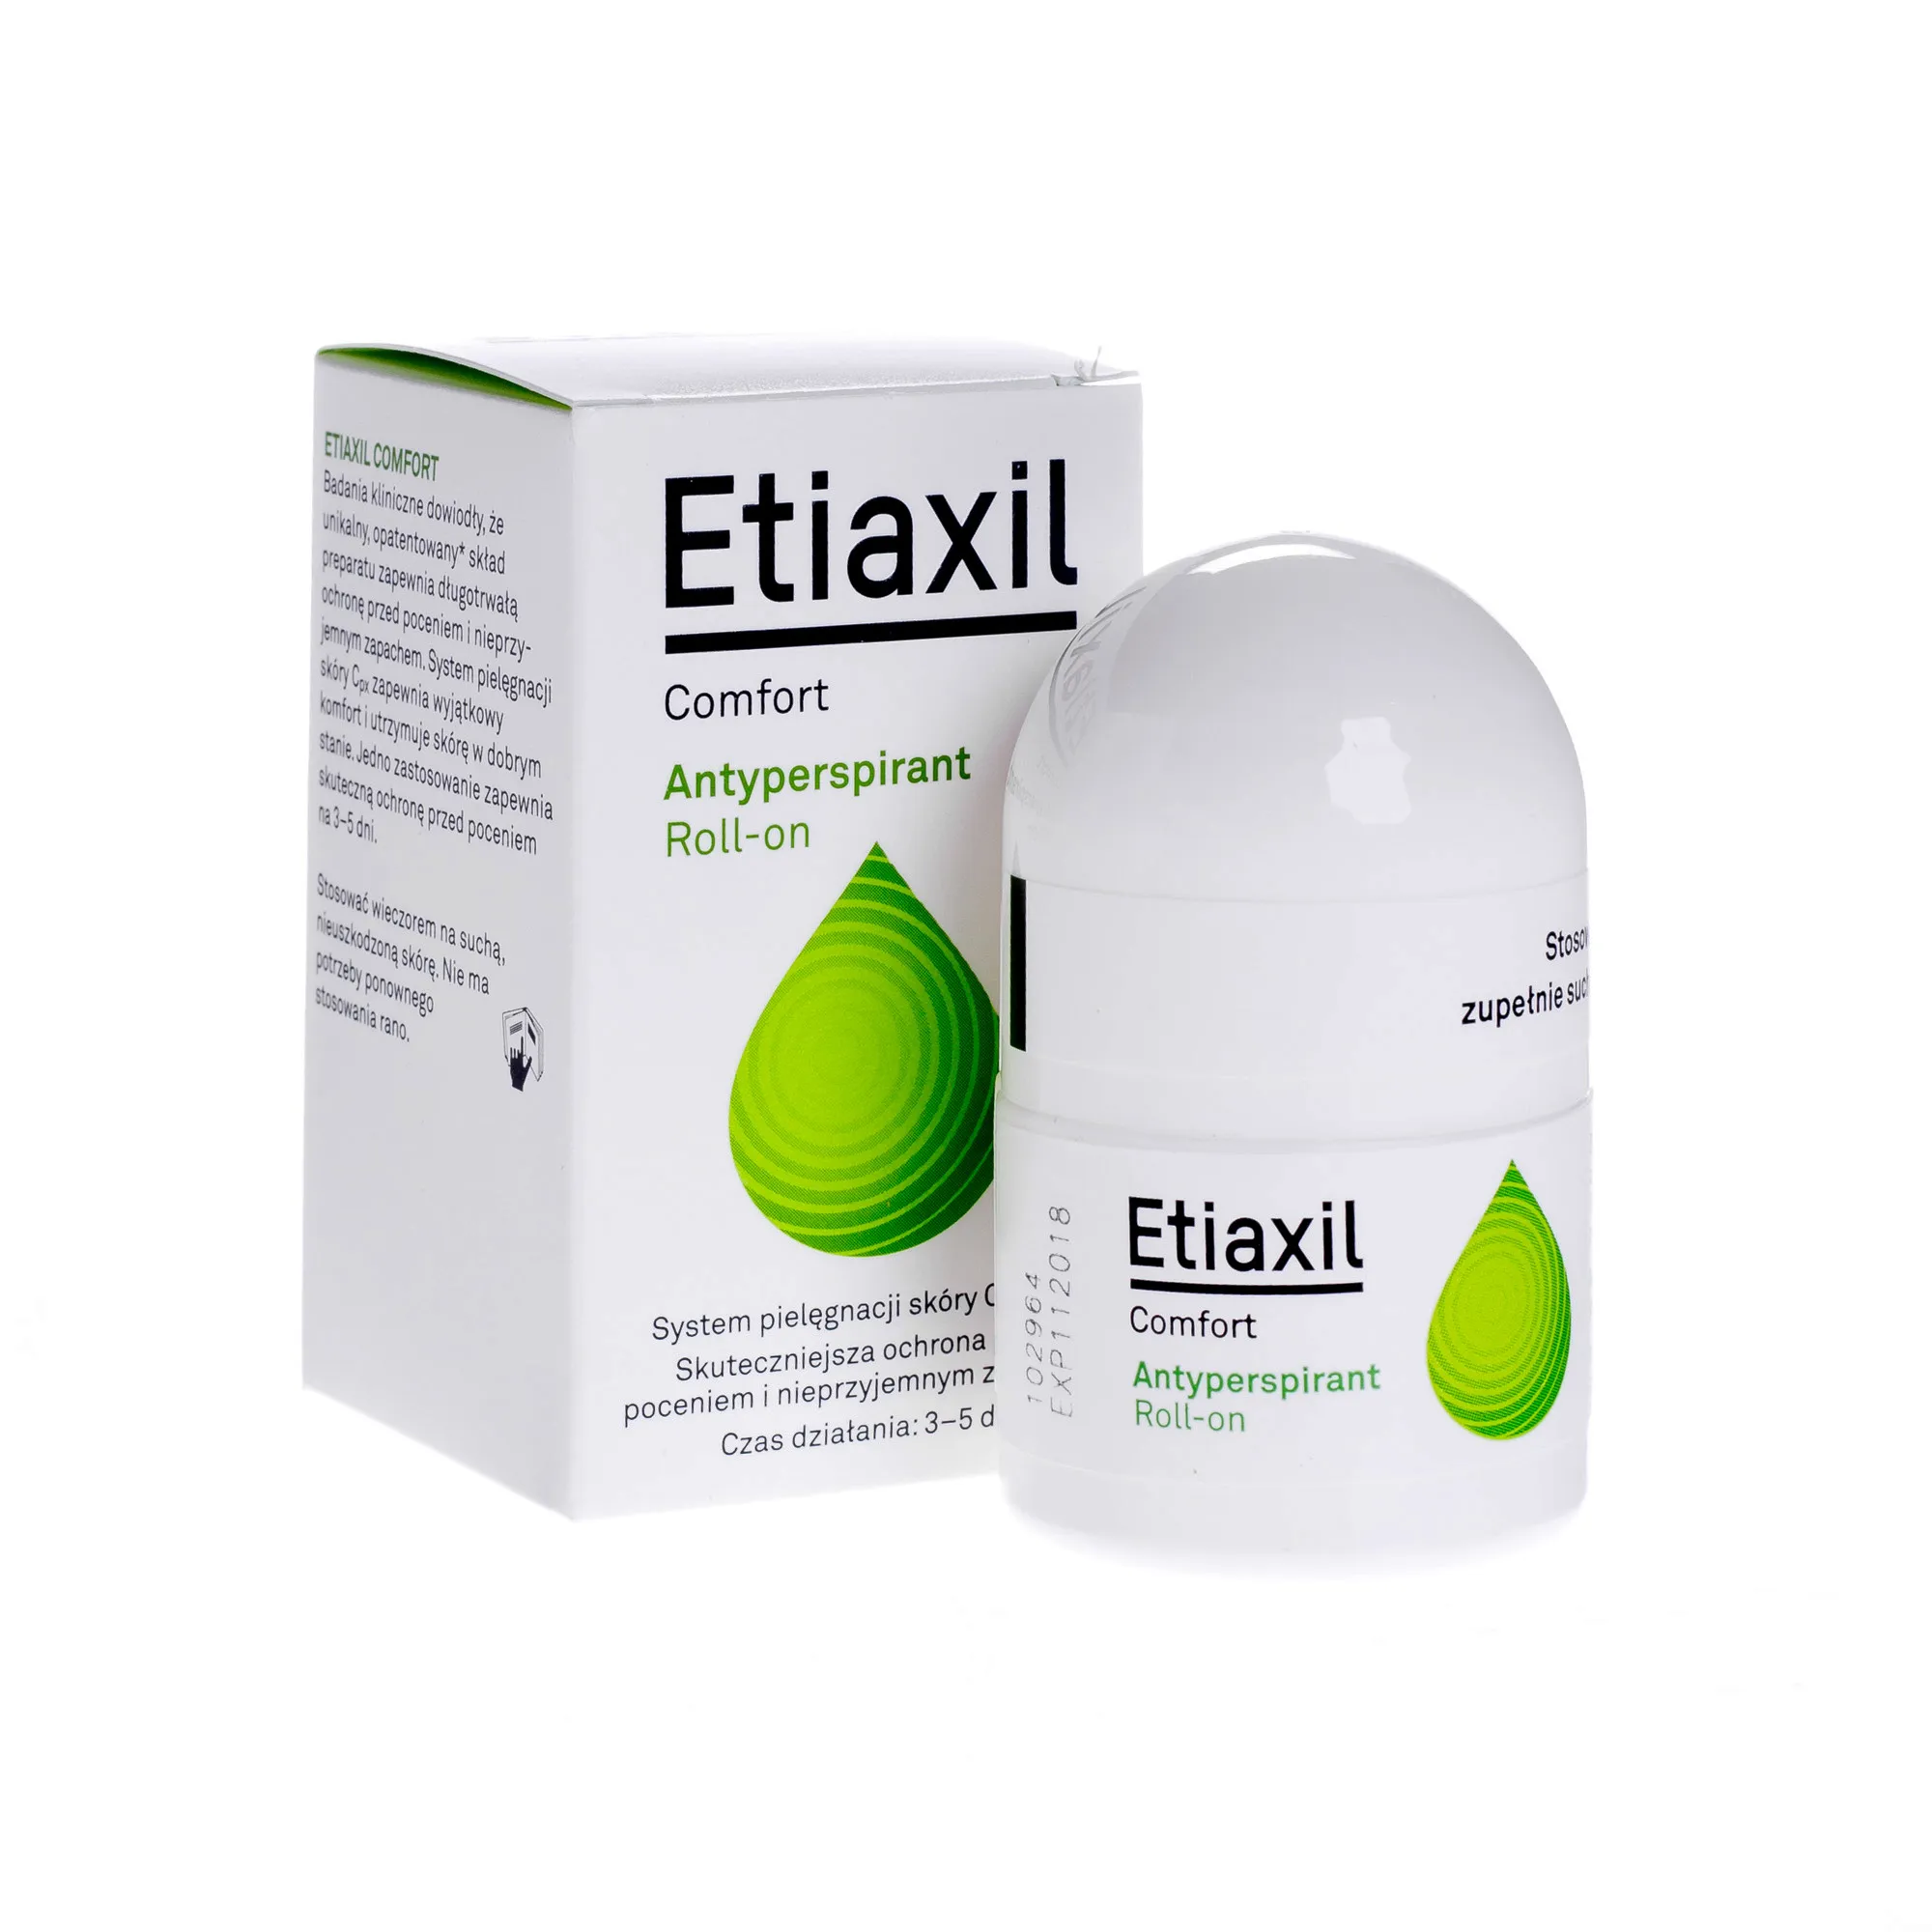 Etiaxil Comfort, antyperspirant roll-on, 15 ml 